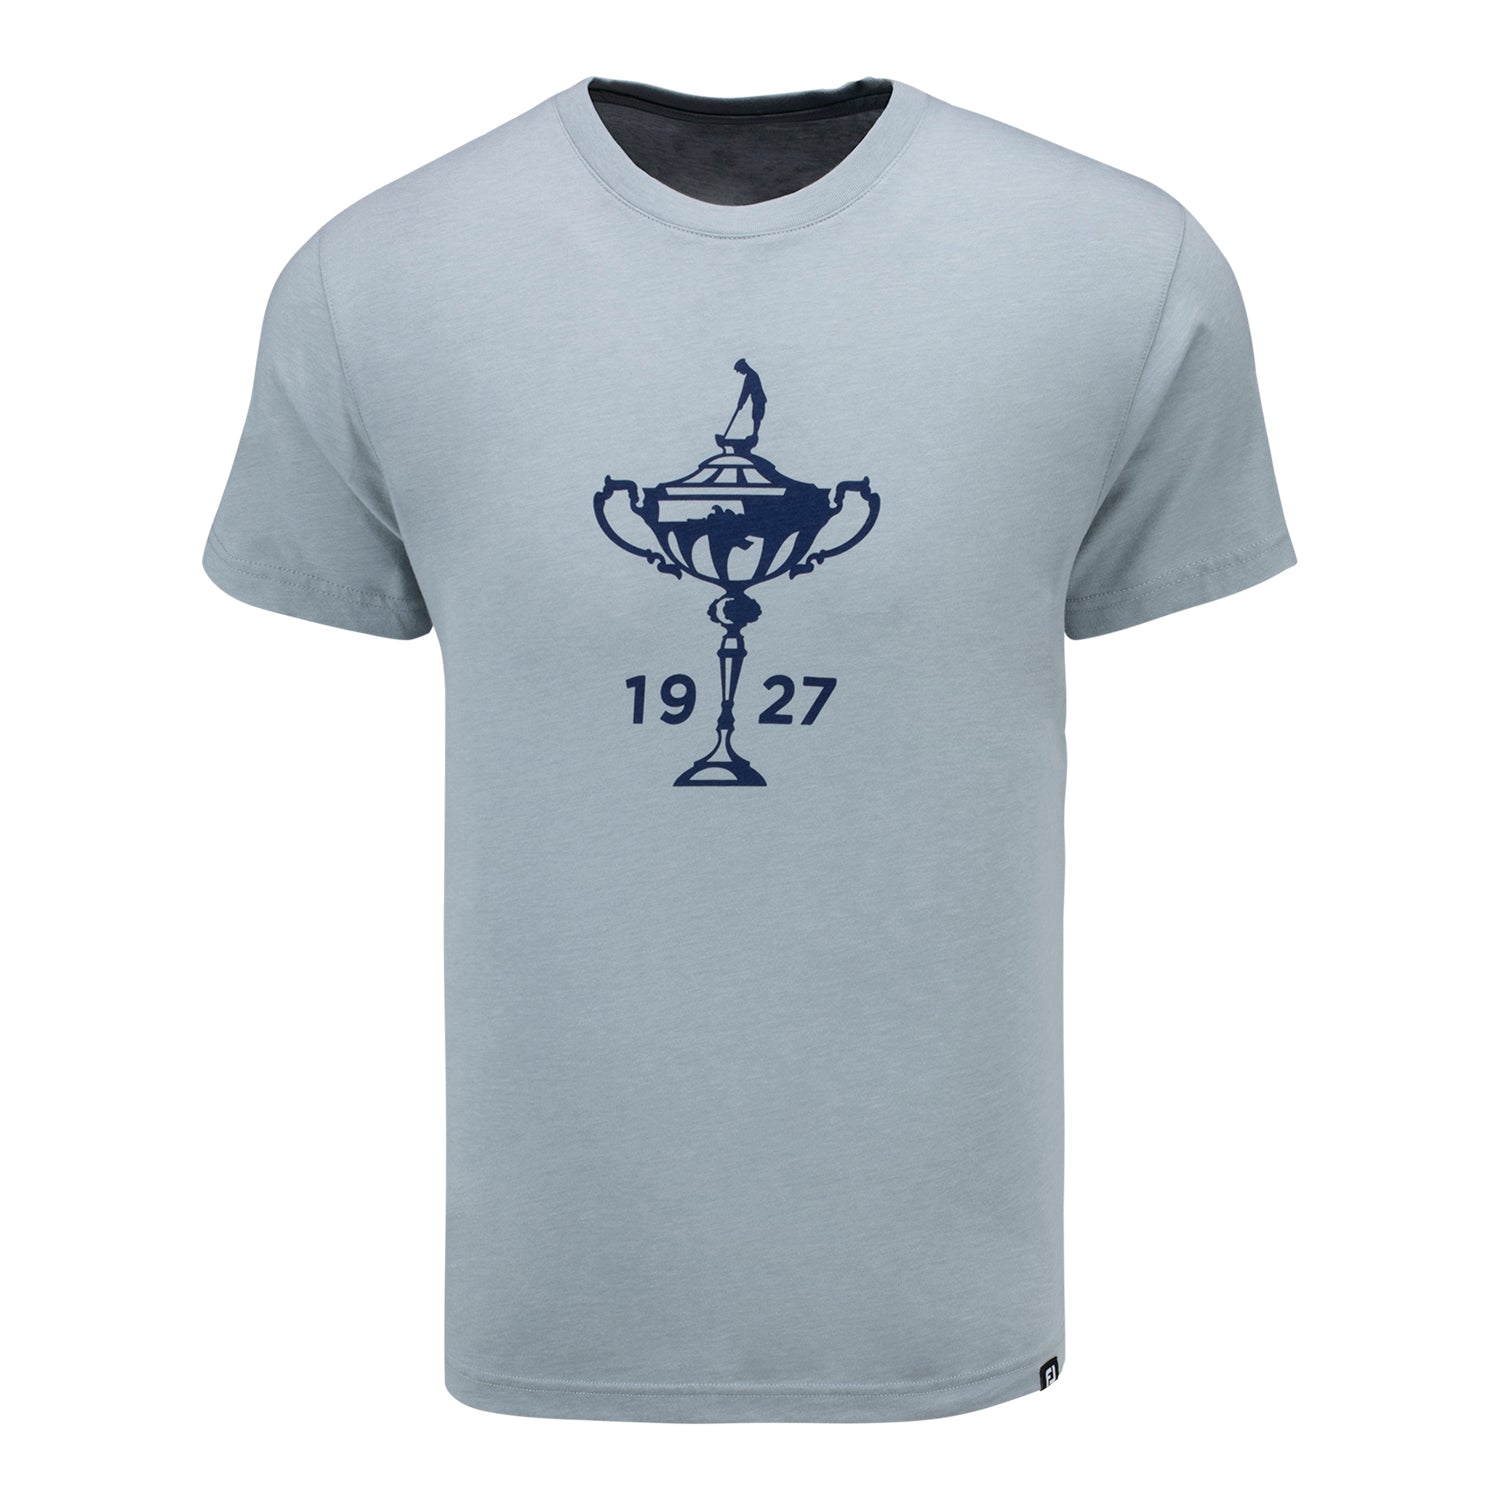 FootJoy Trophy T-Shirt - Grey - Front View